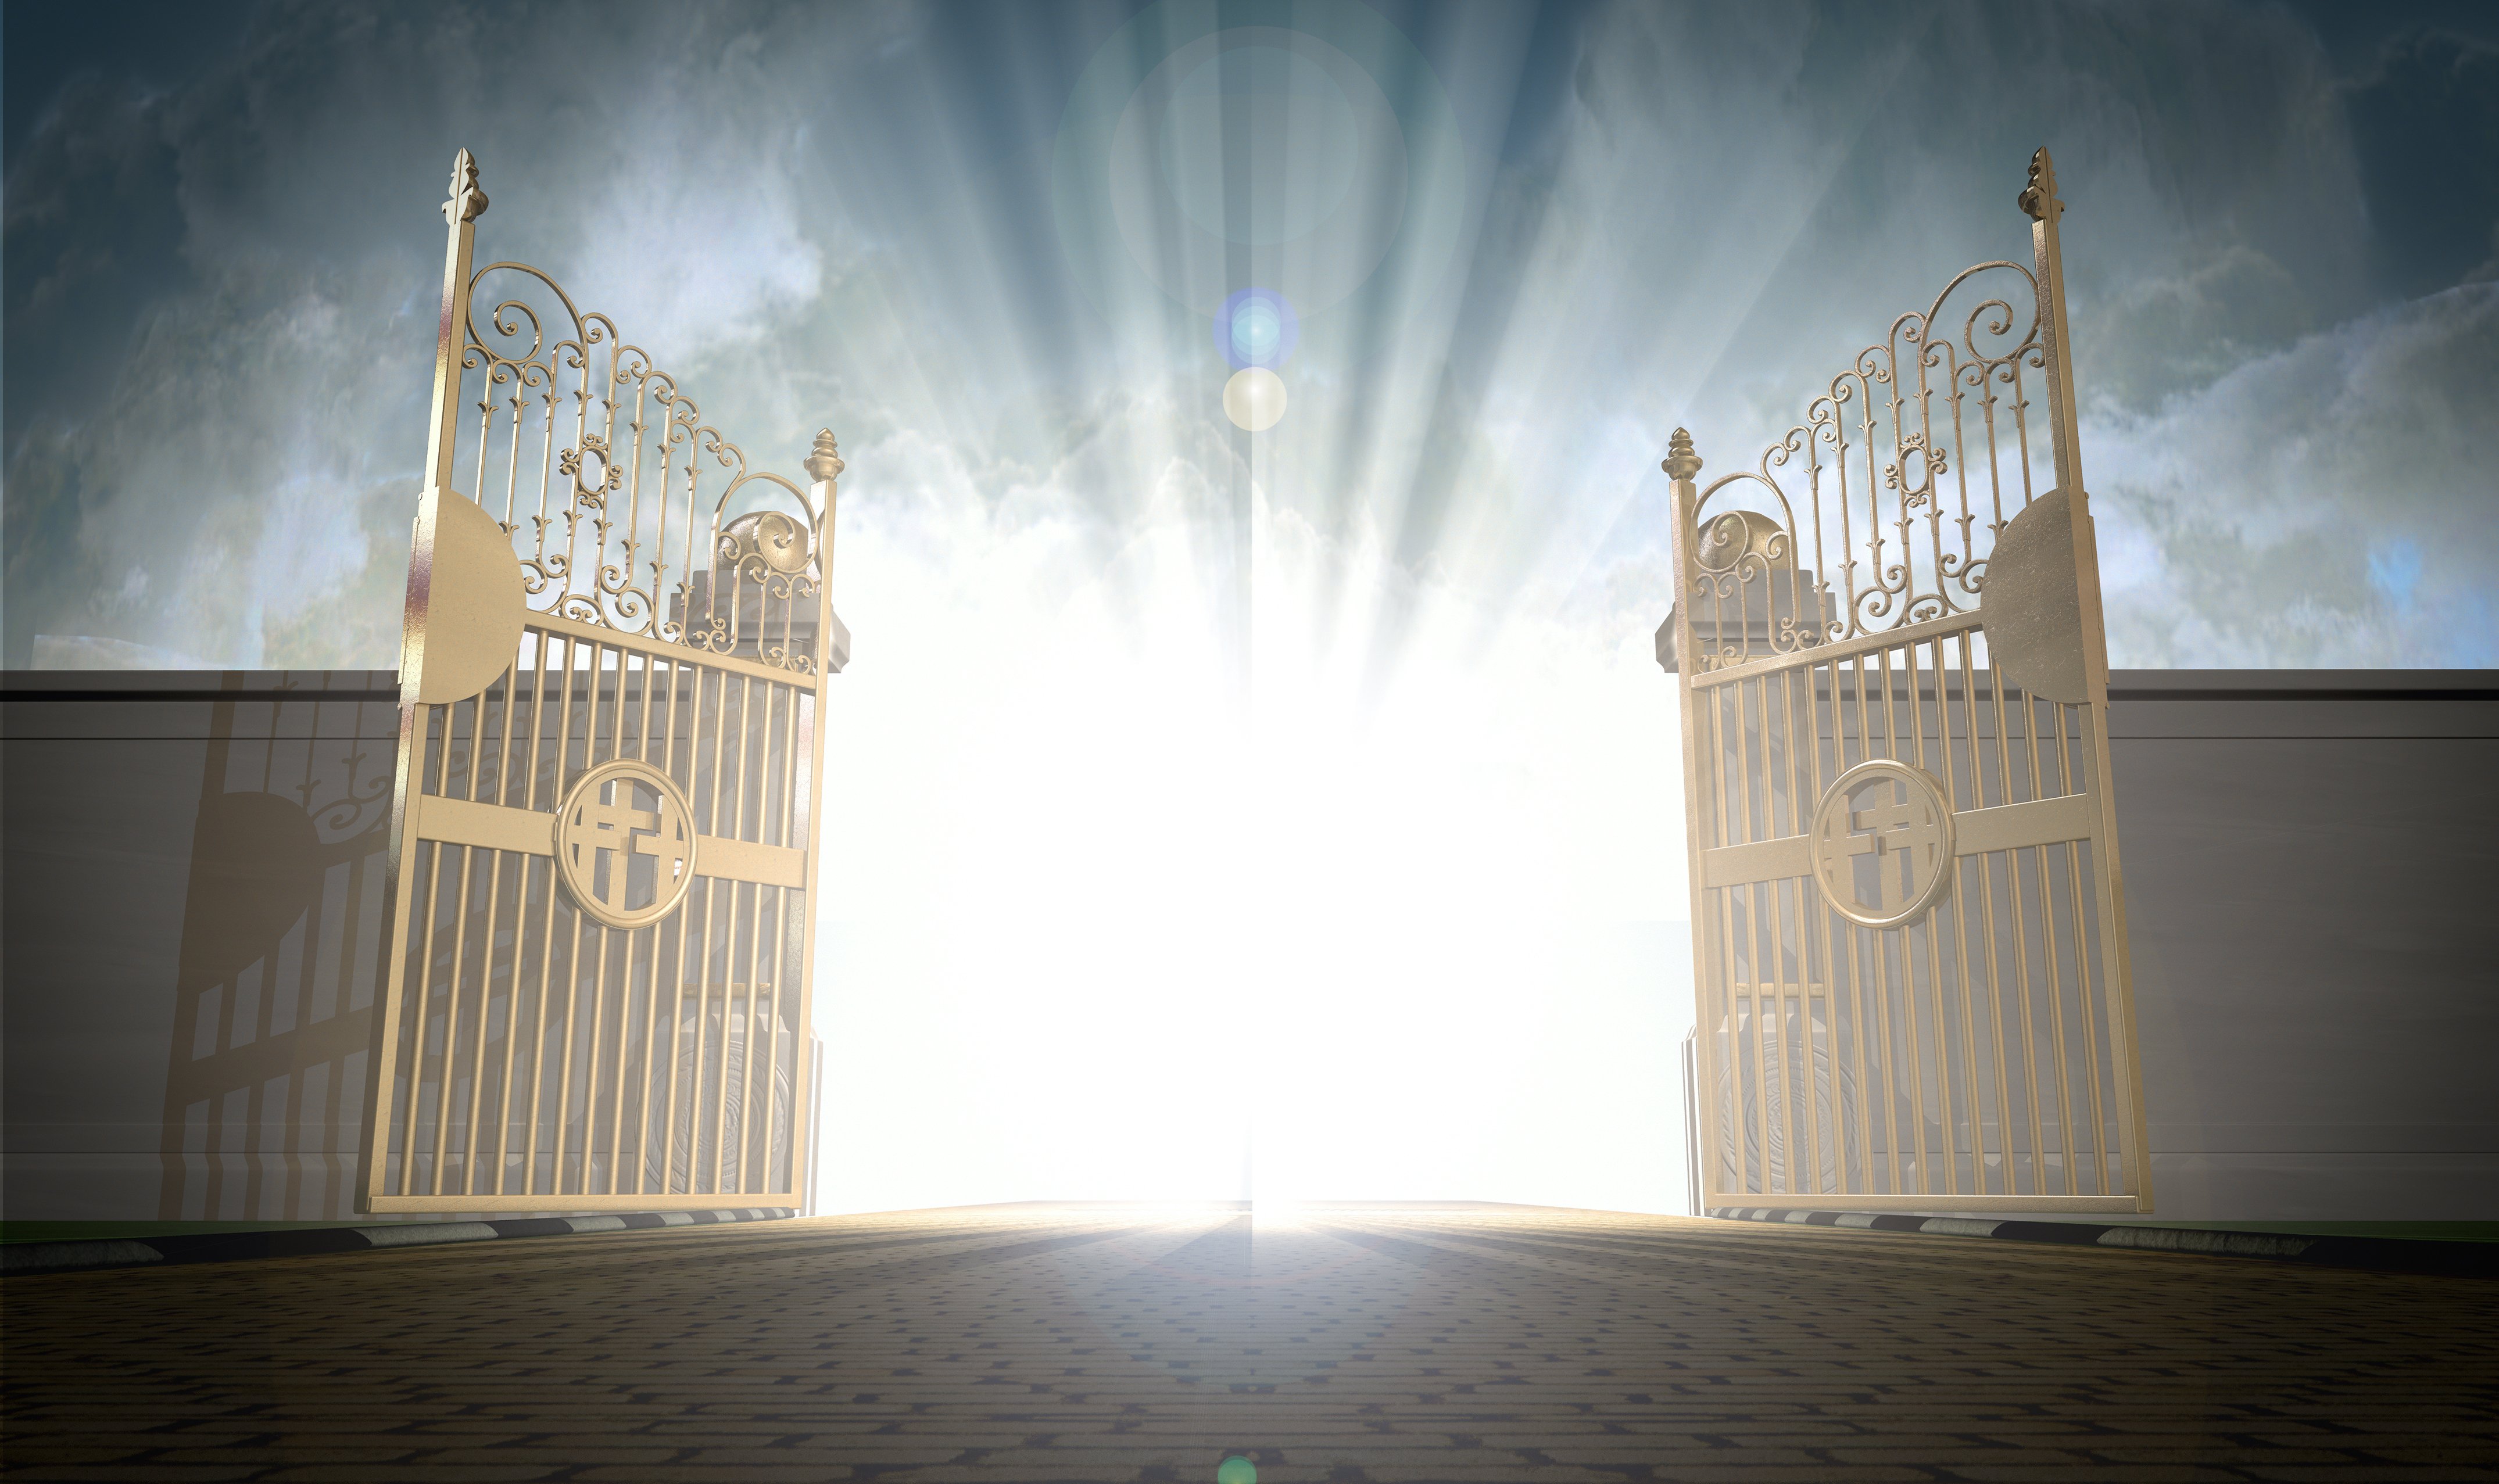 Heaven's gates | Source: Shutterstock